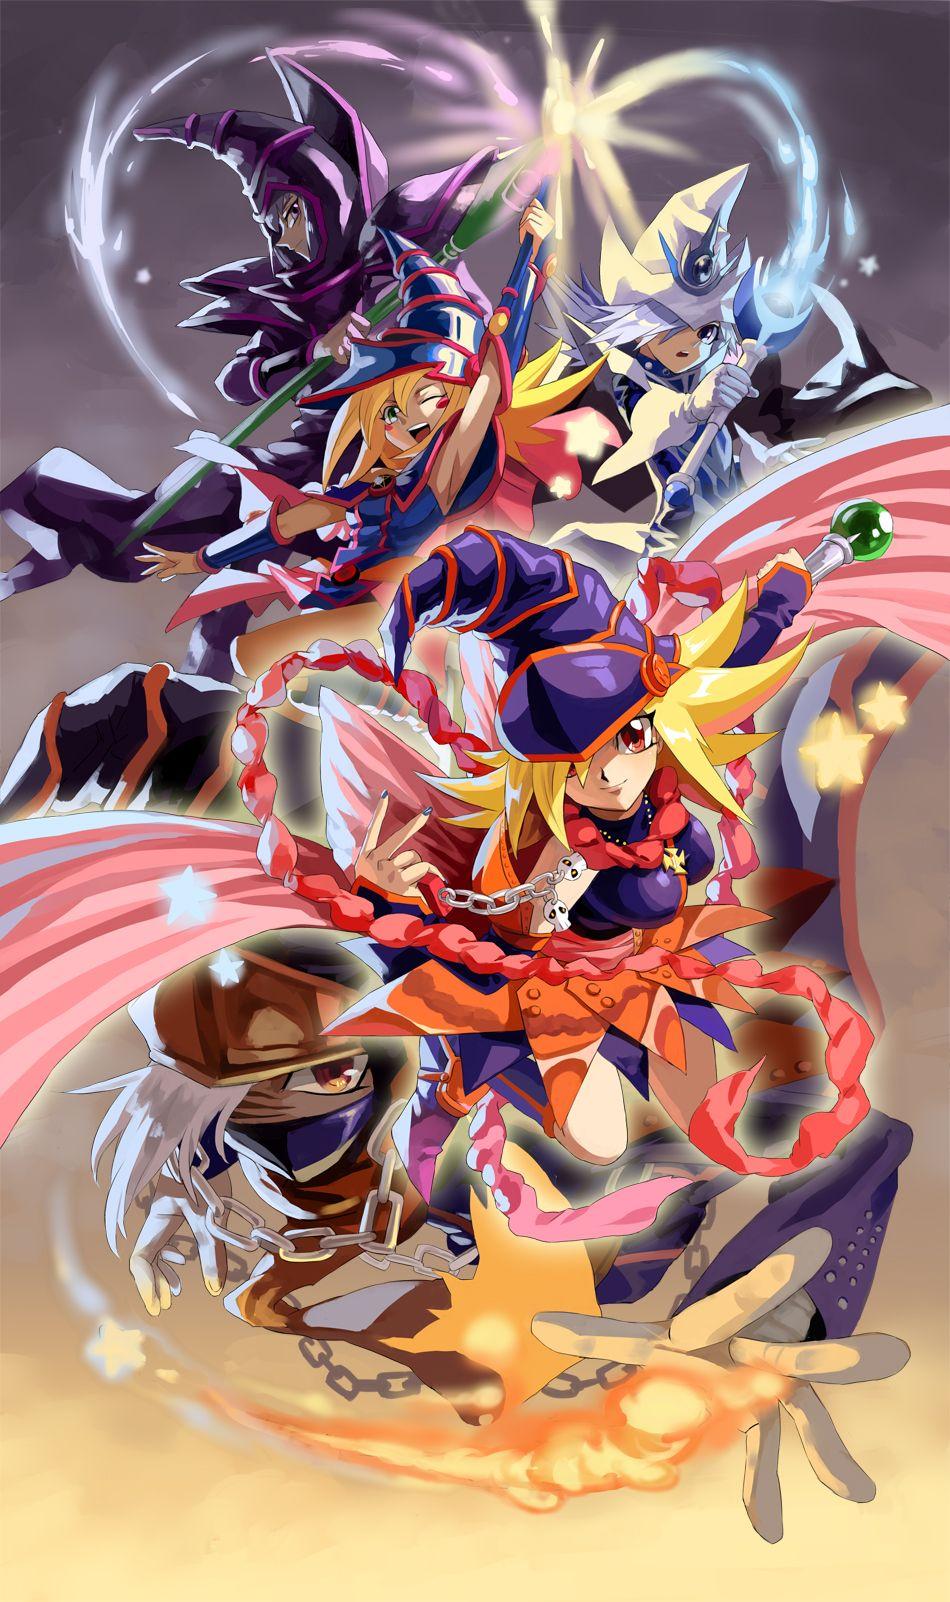 Yu Gi Oh! ZEXAL, Mobile Wallpaper Anime Image Board